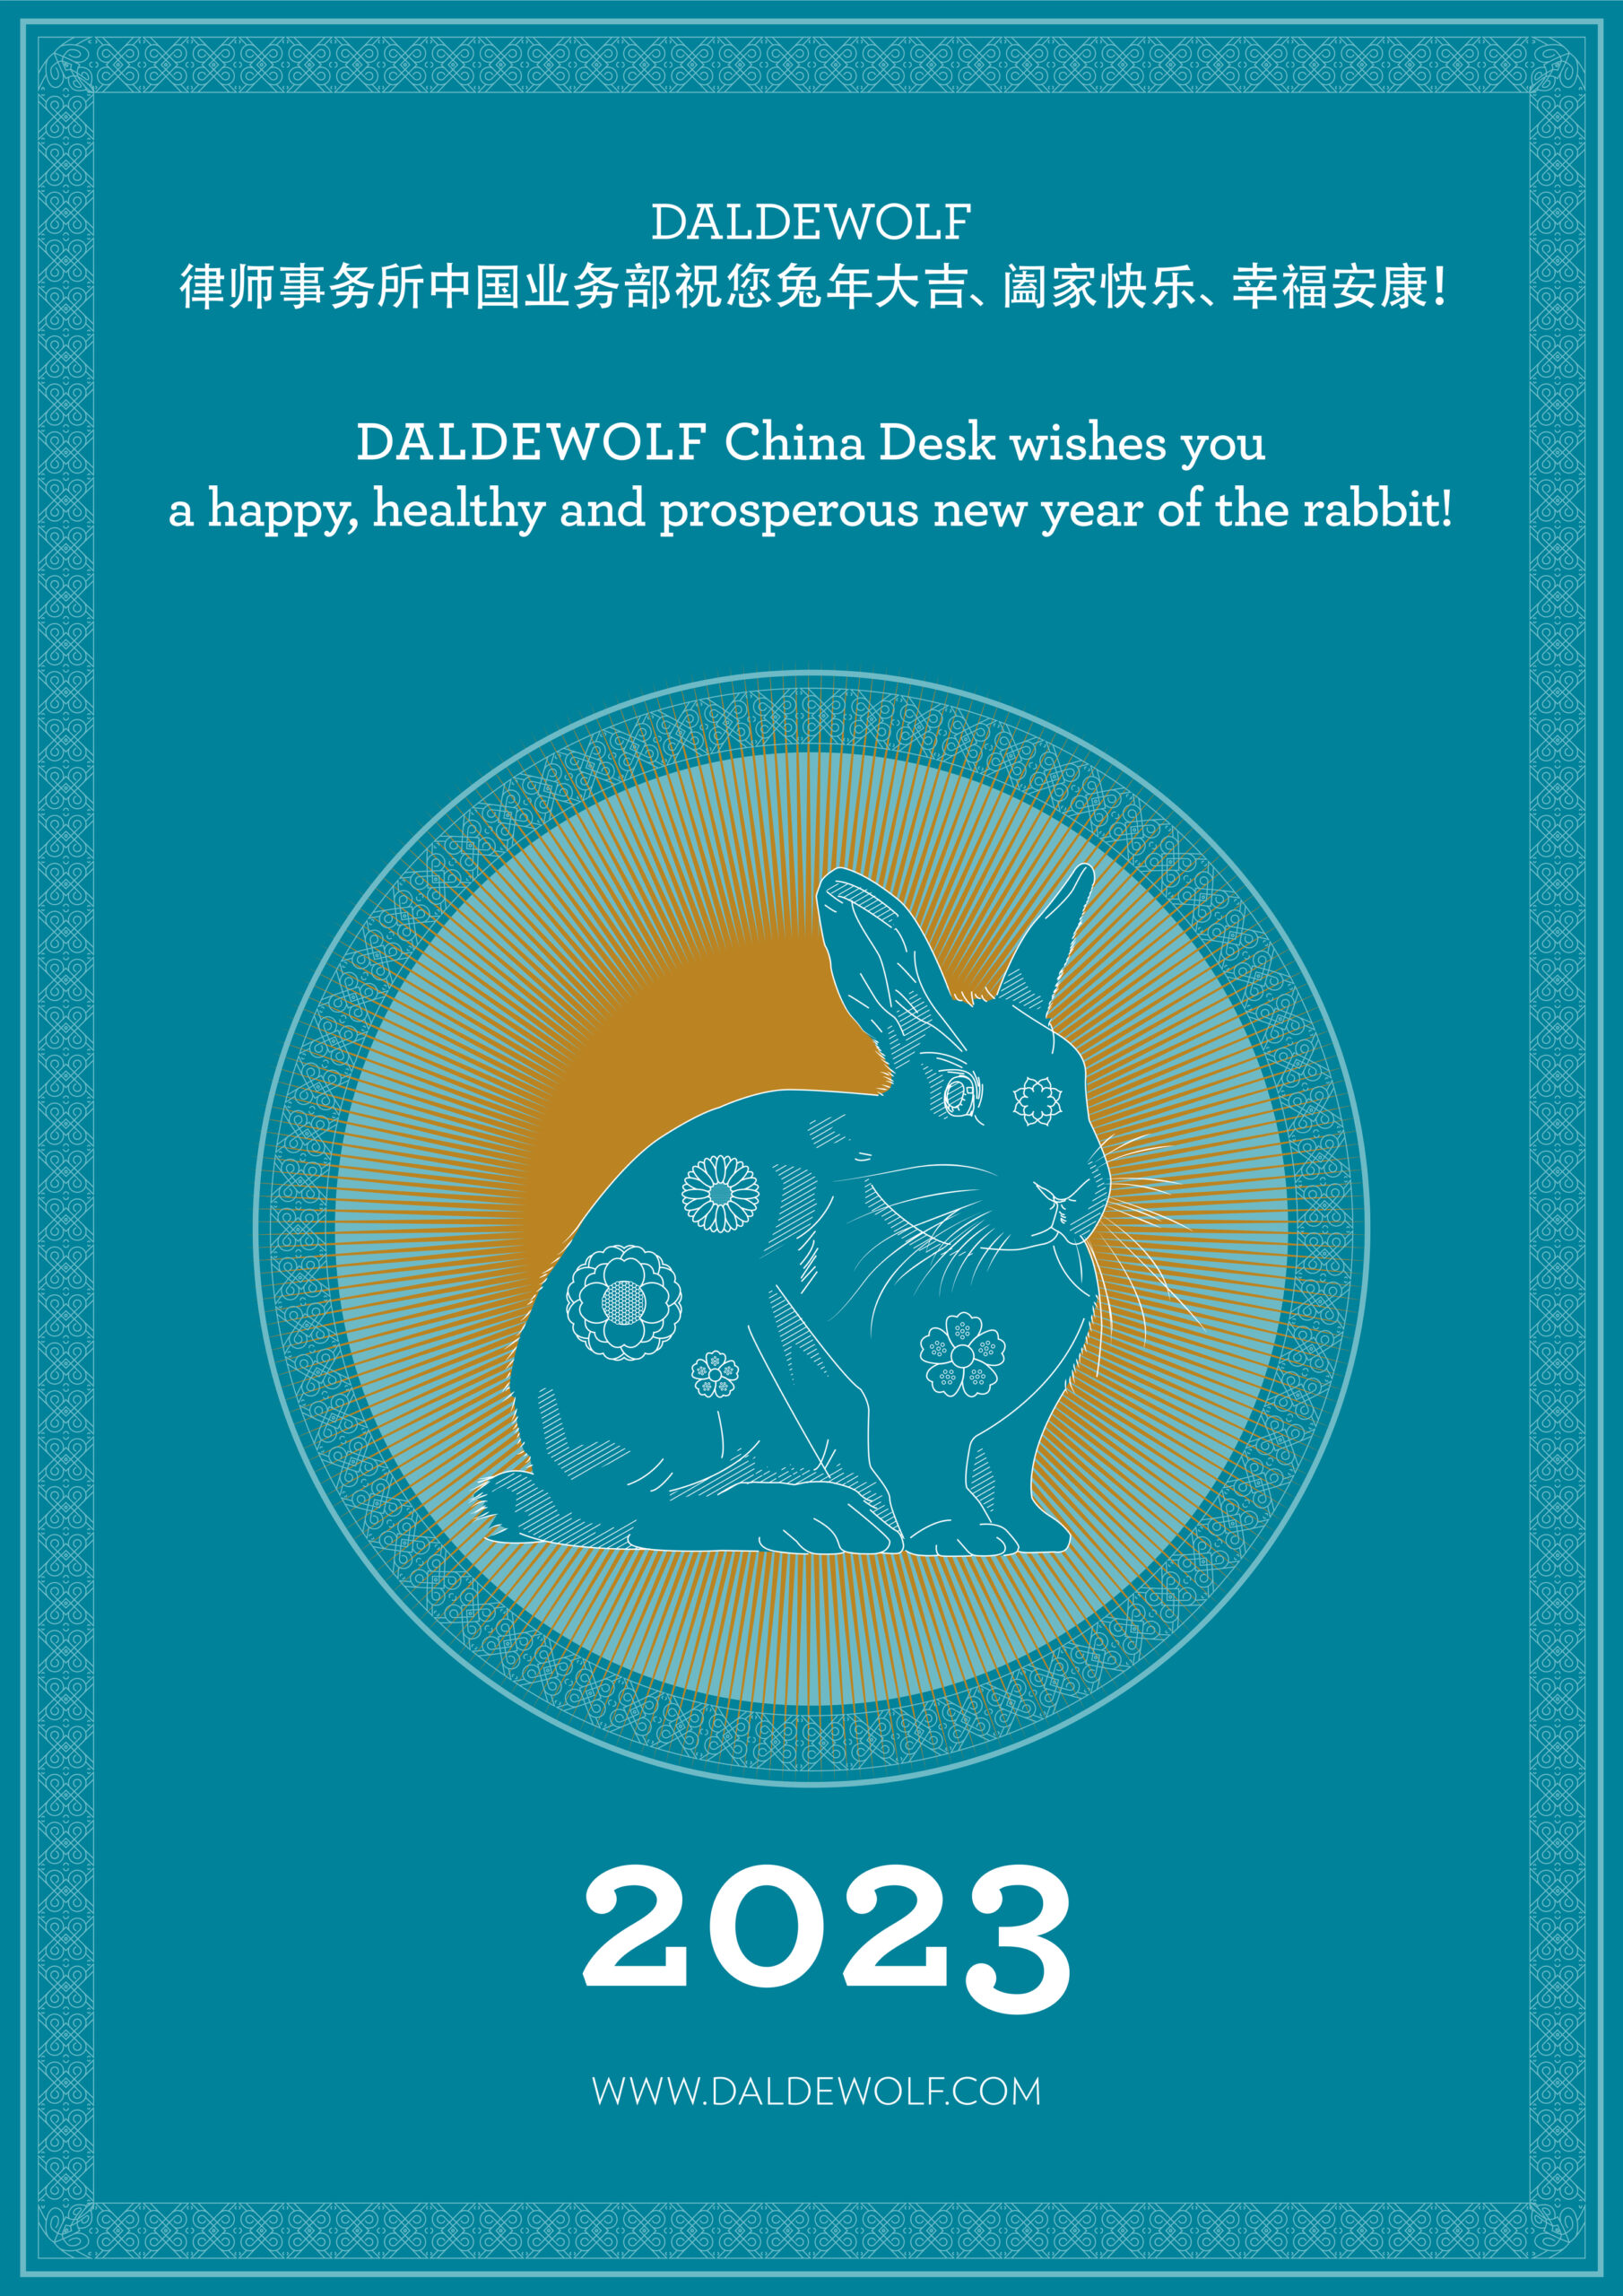 Visuel vœux China desk 2023 - DALDEWOLF - Hugues de CASTILLO